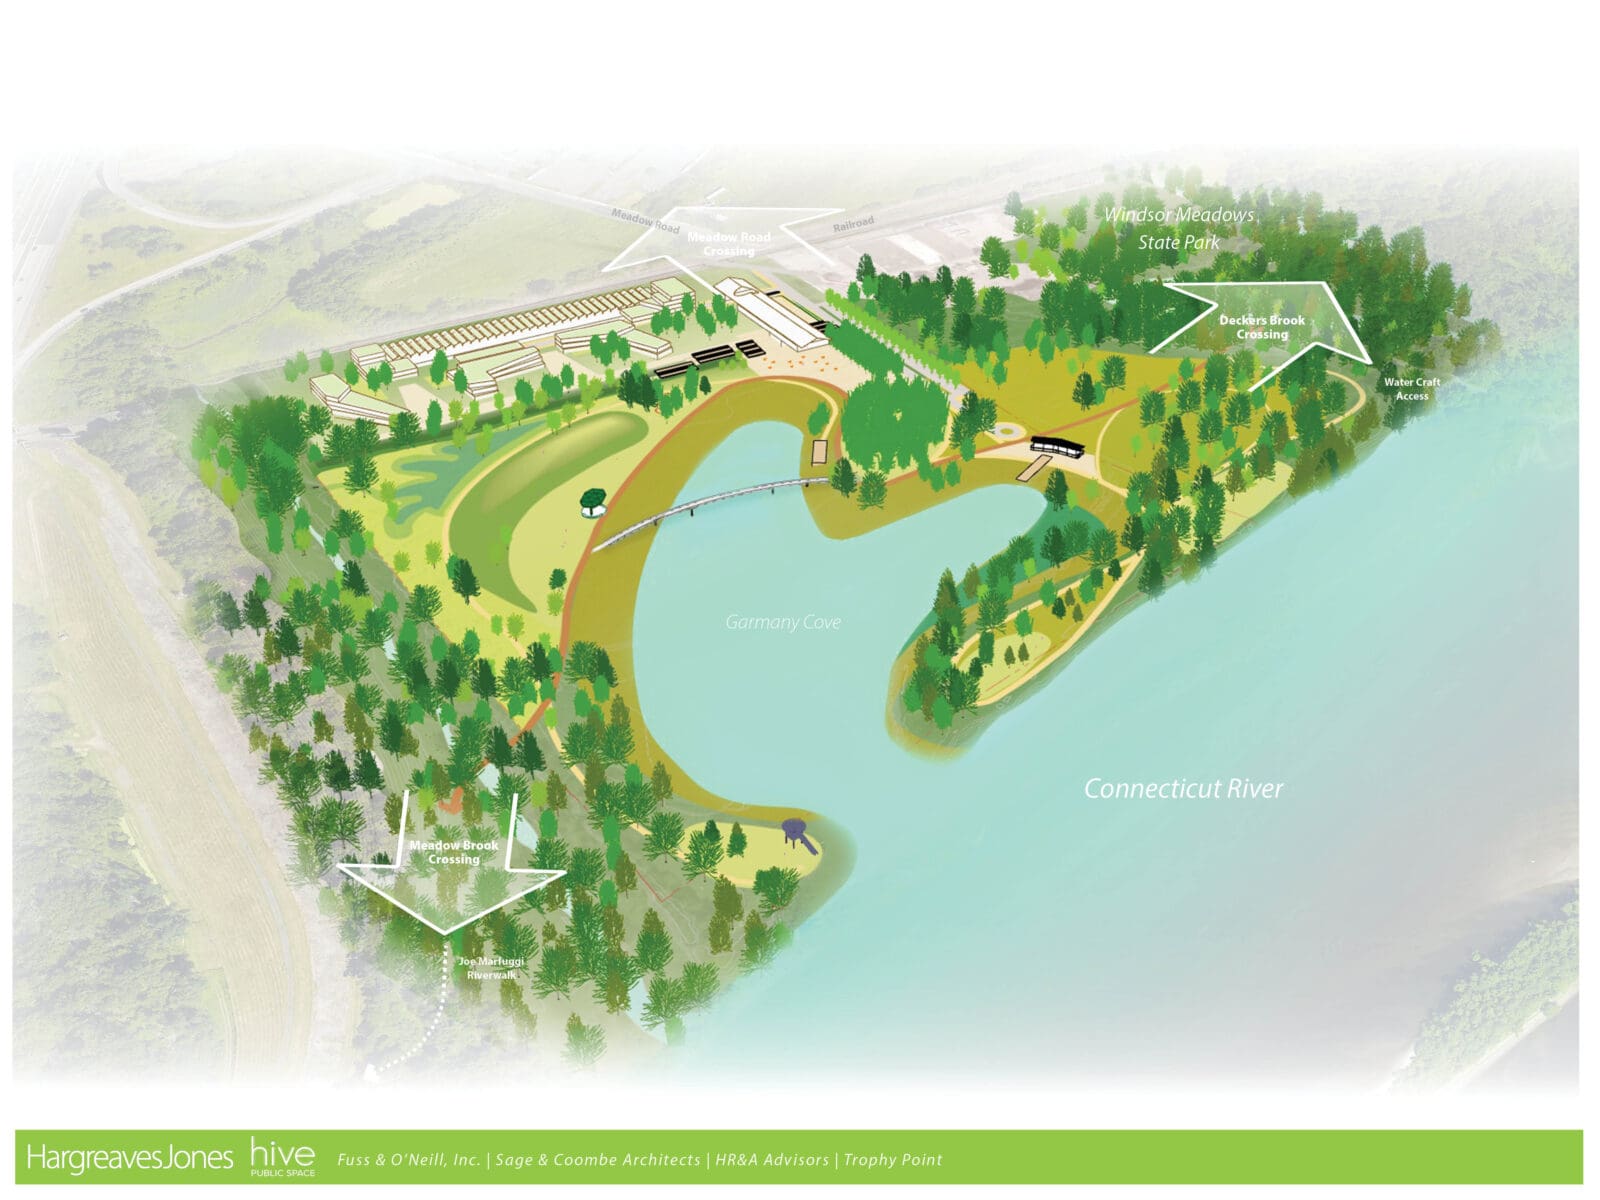 Emerging Park Vision Plan